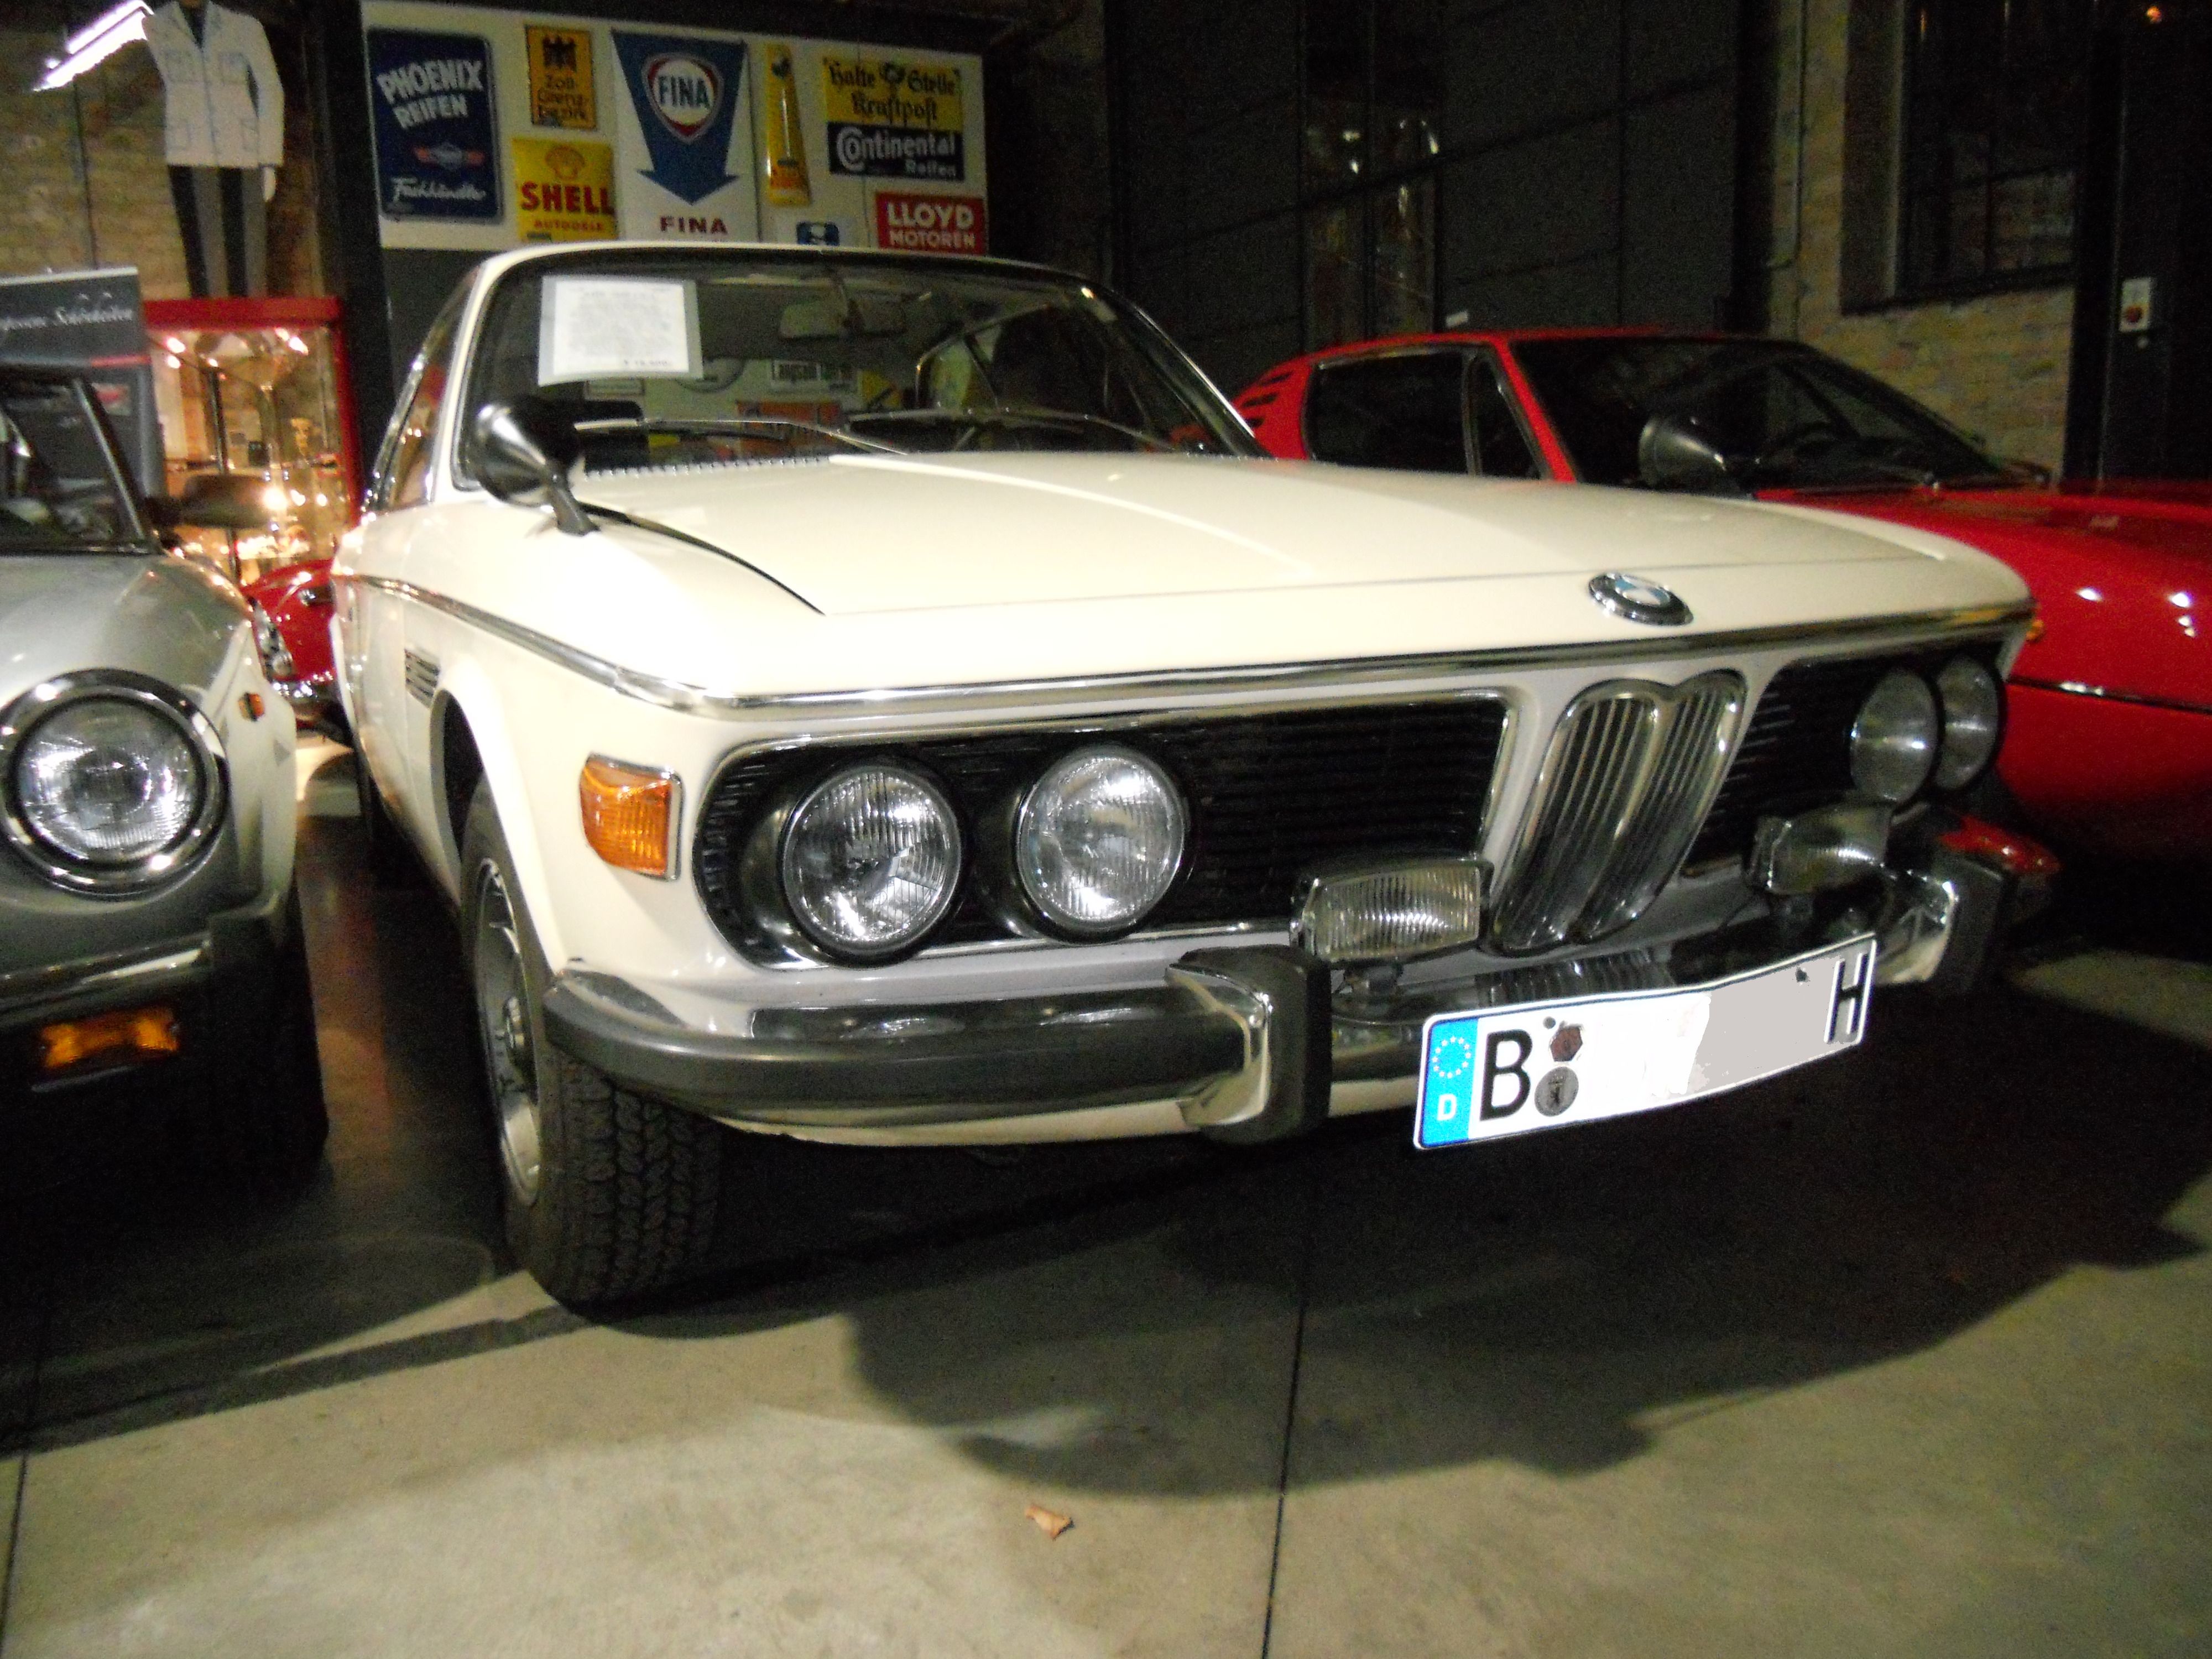 BMW 2800 CS / A "BMW New Six CS" (1968-1975) | Flickr - Photo Sharing!